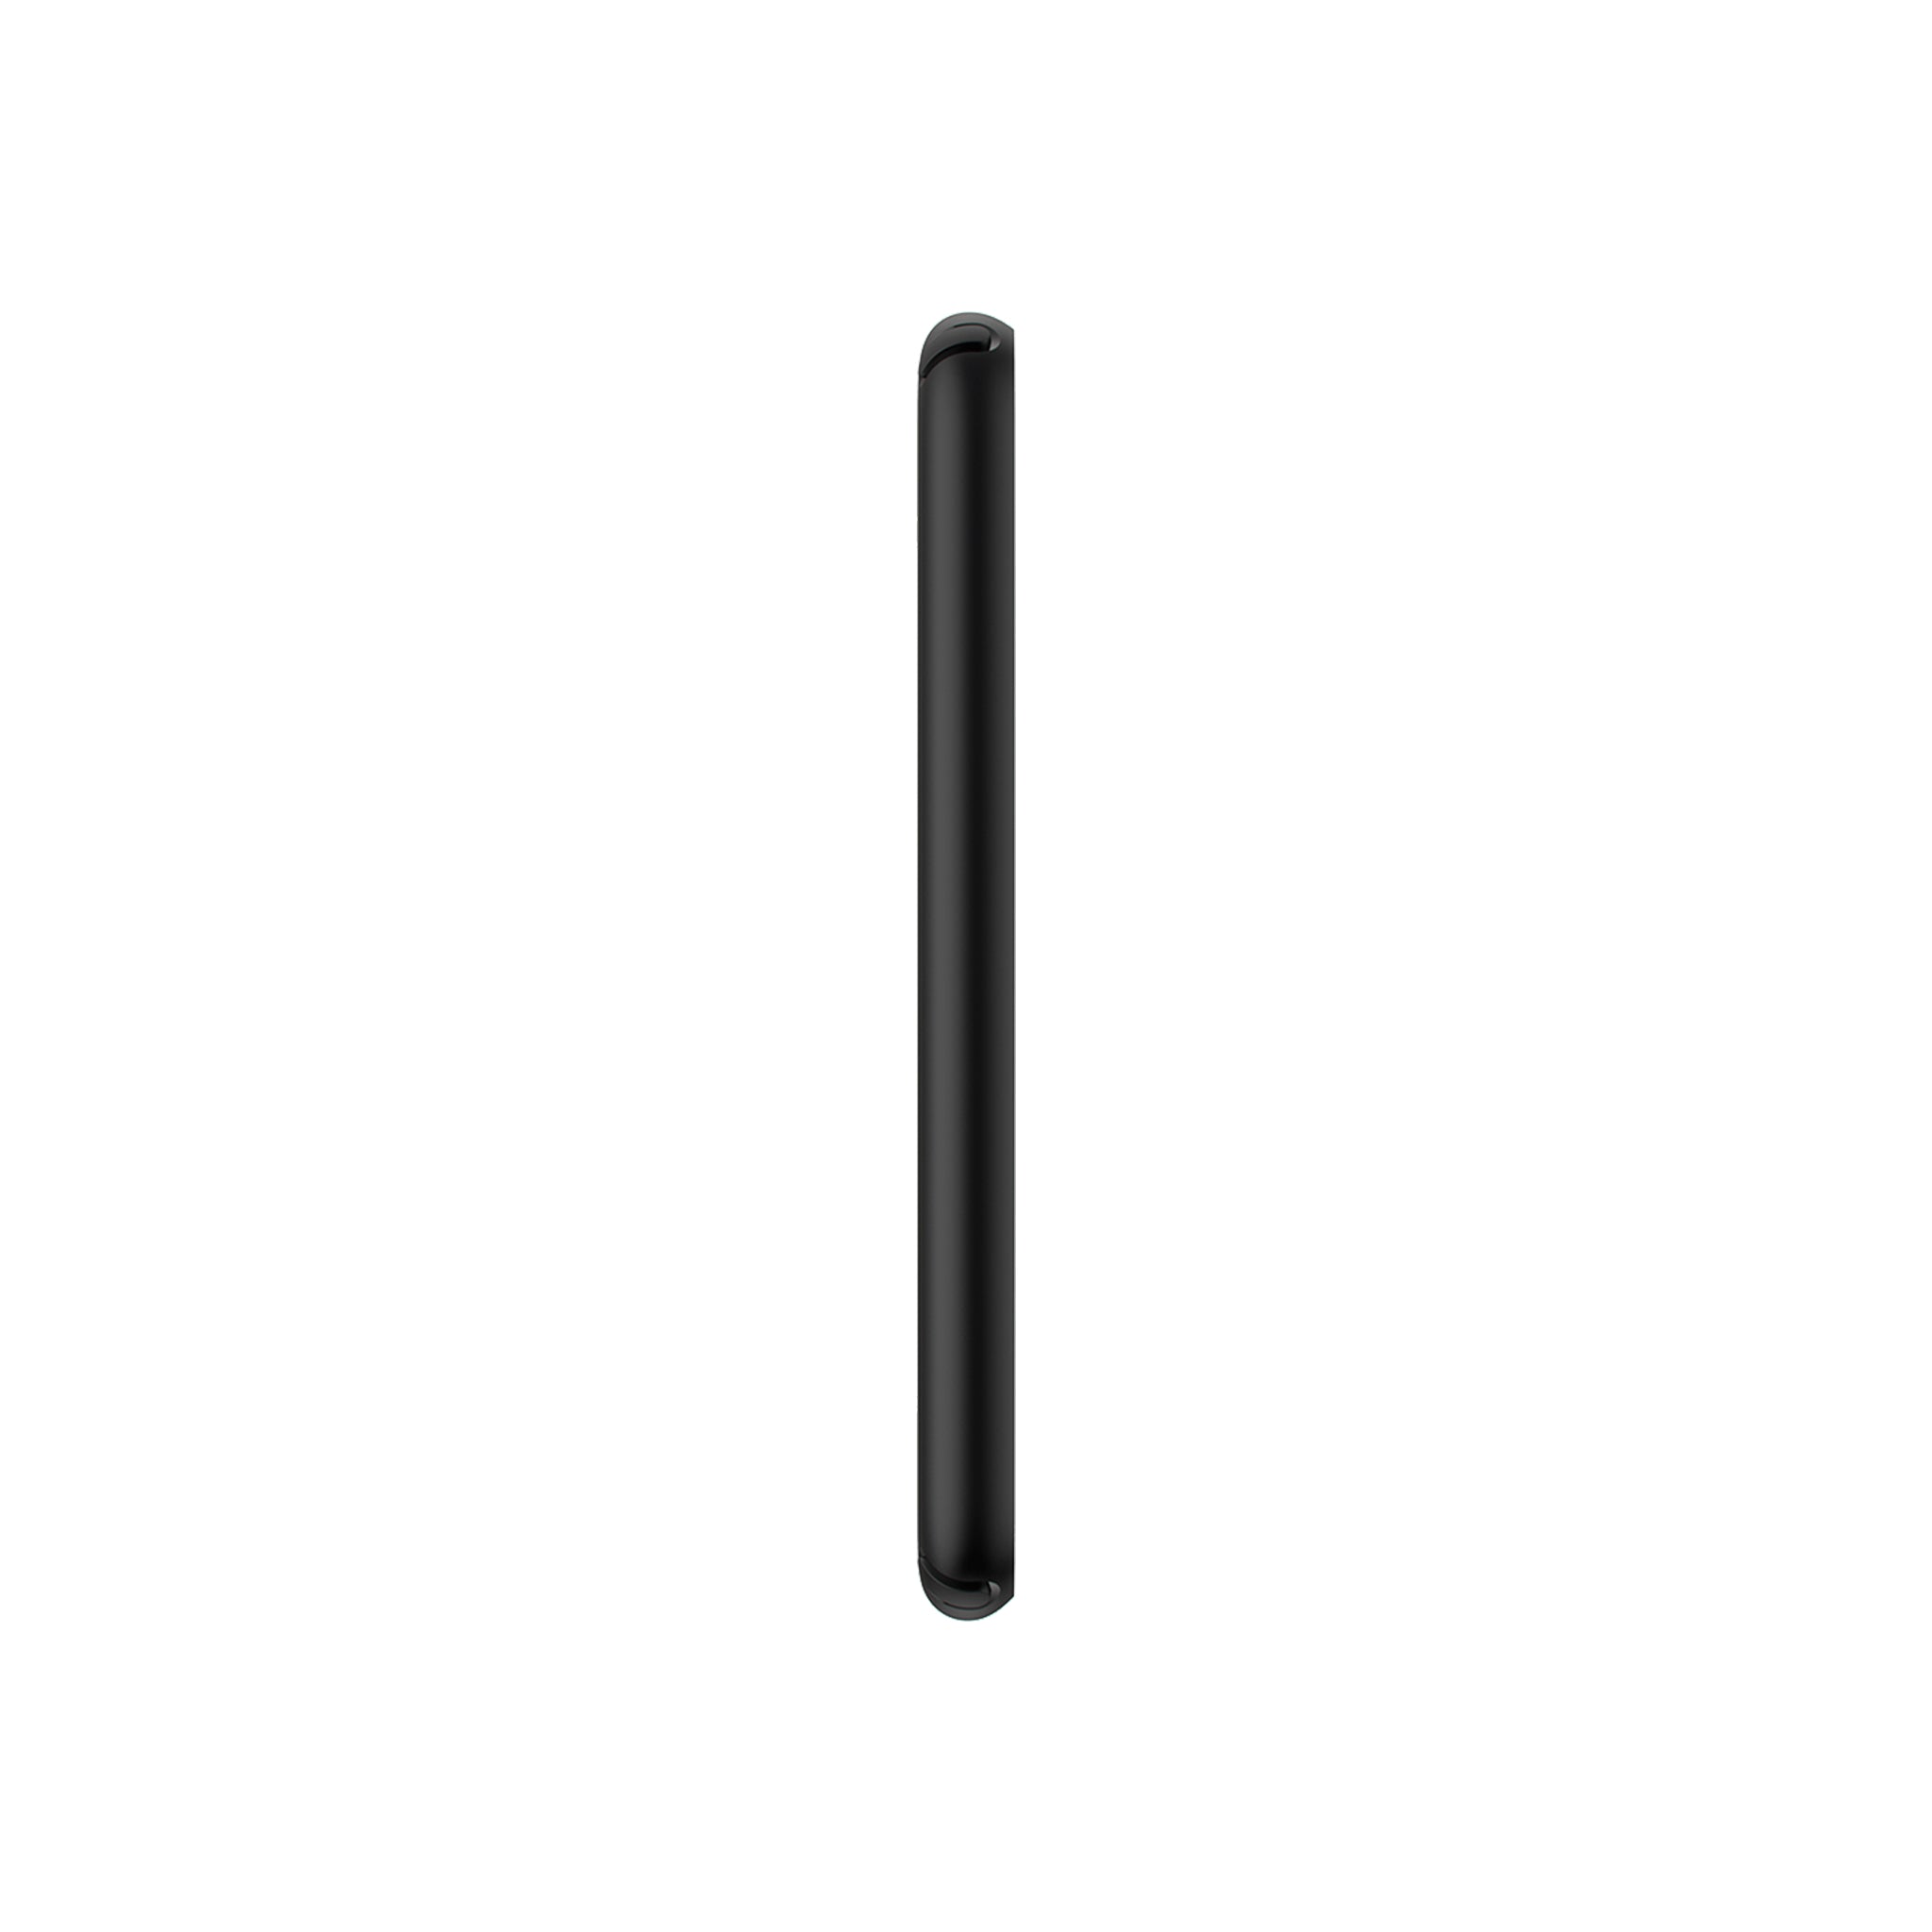 Speck - Presidio Lite Case For Motorola Moto G7 Play - Black